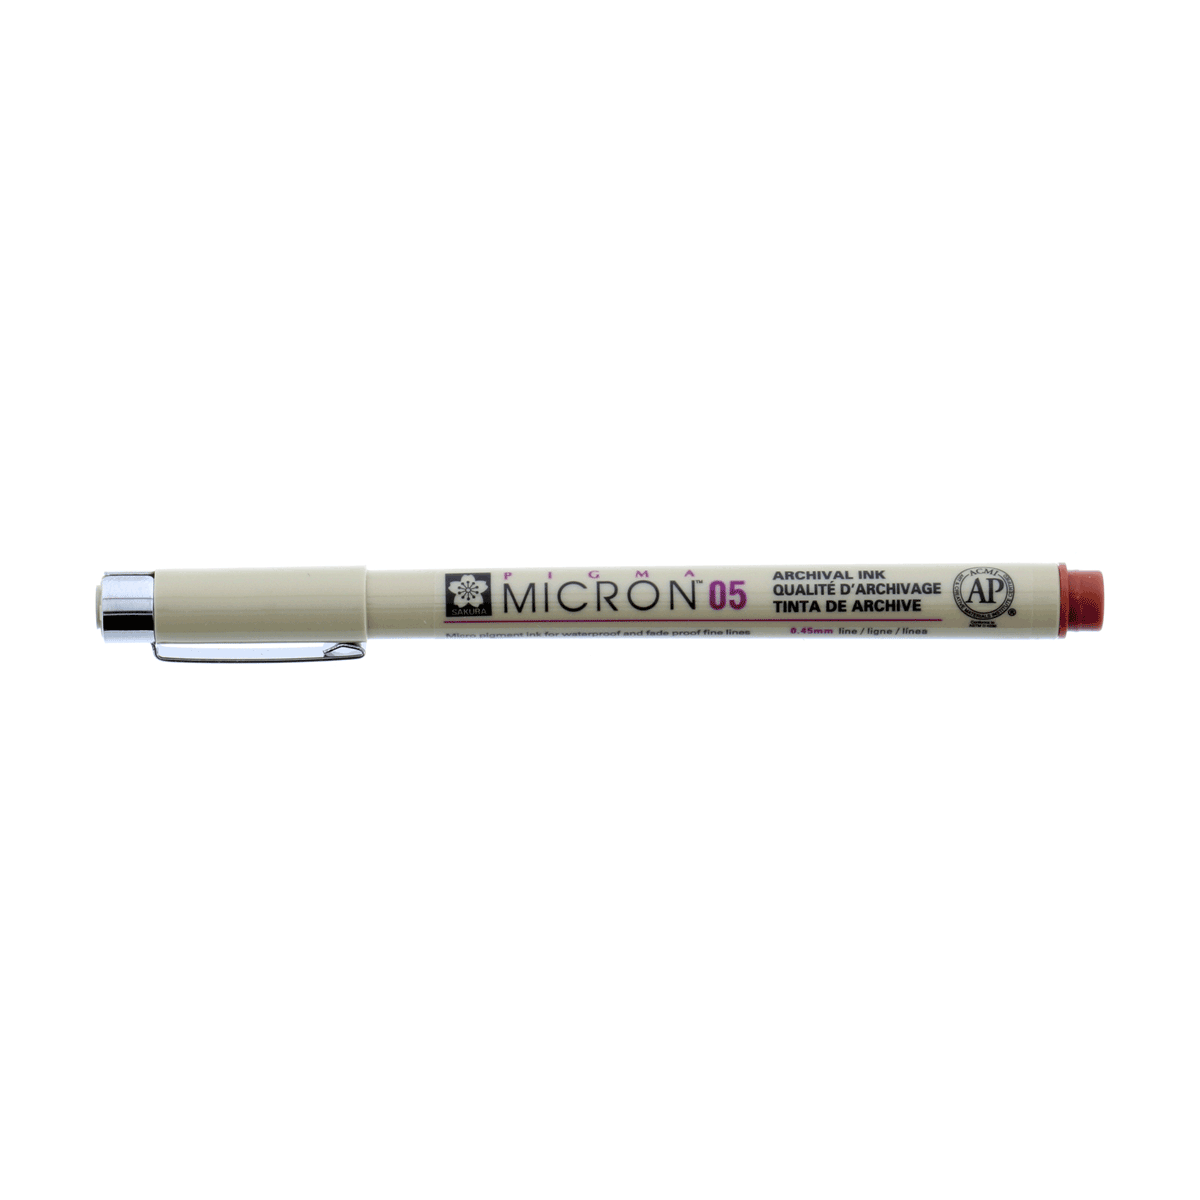 Micron Pigma Pen - Brown 05 .45mm Line